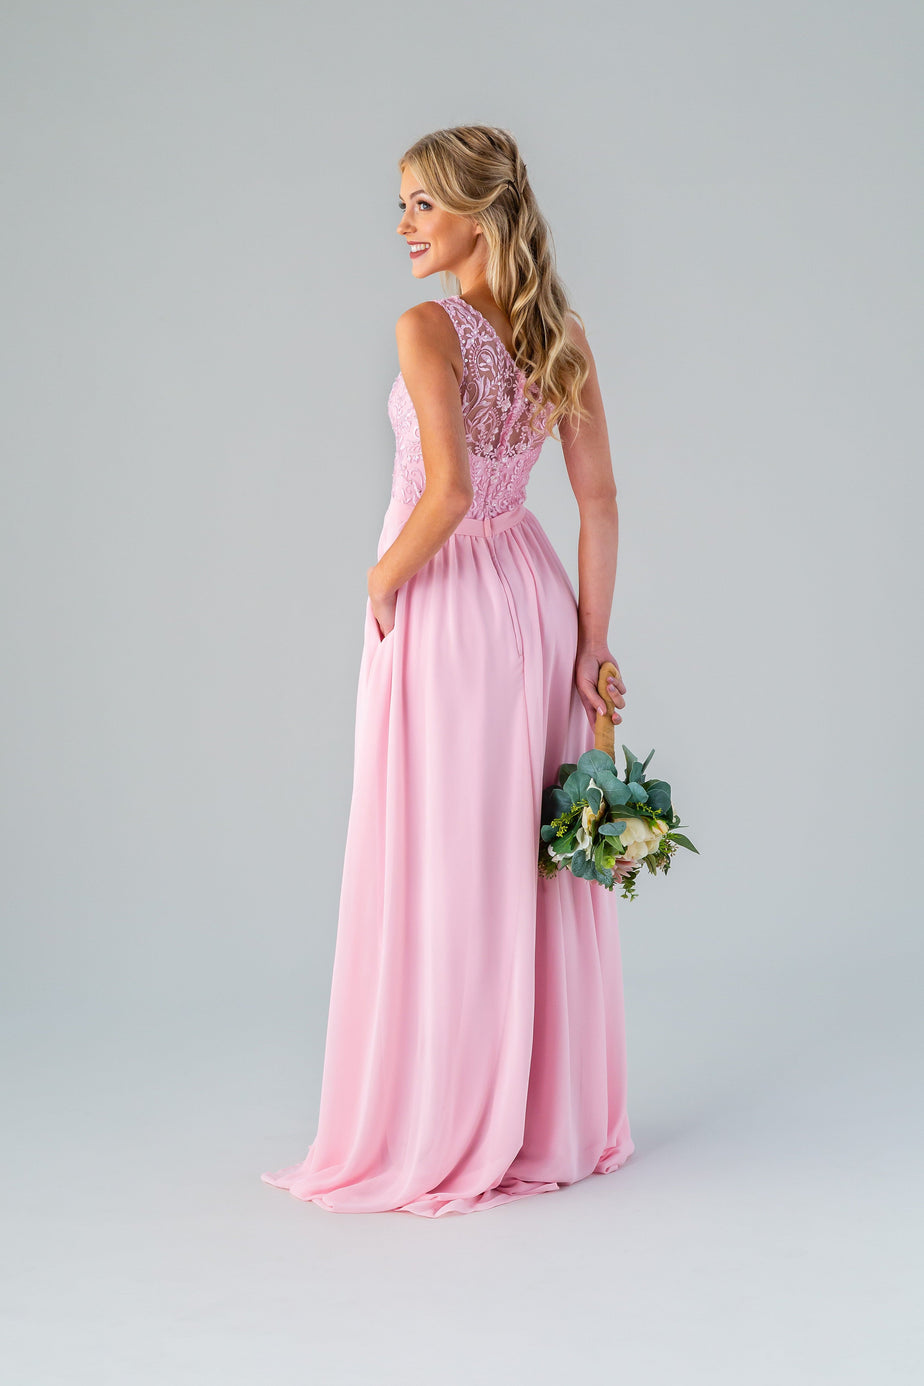 Blush Pink Bridesmaid Dresses Starting at $99